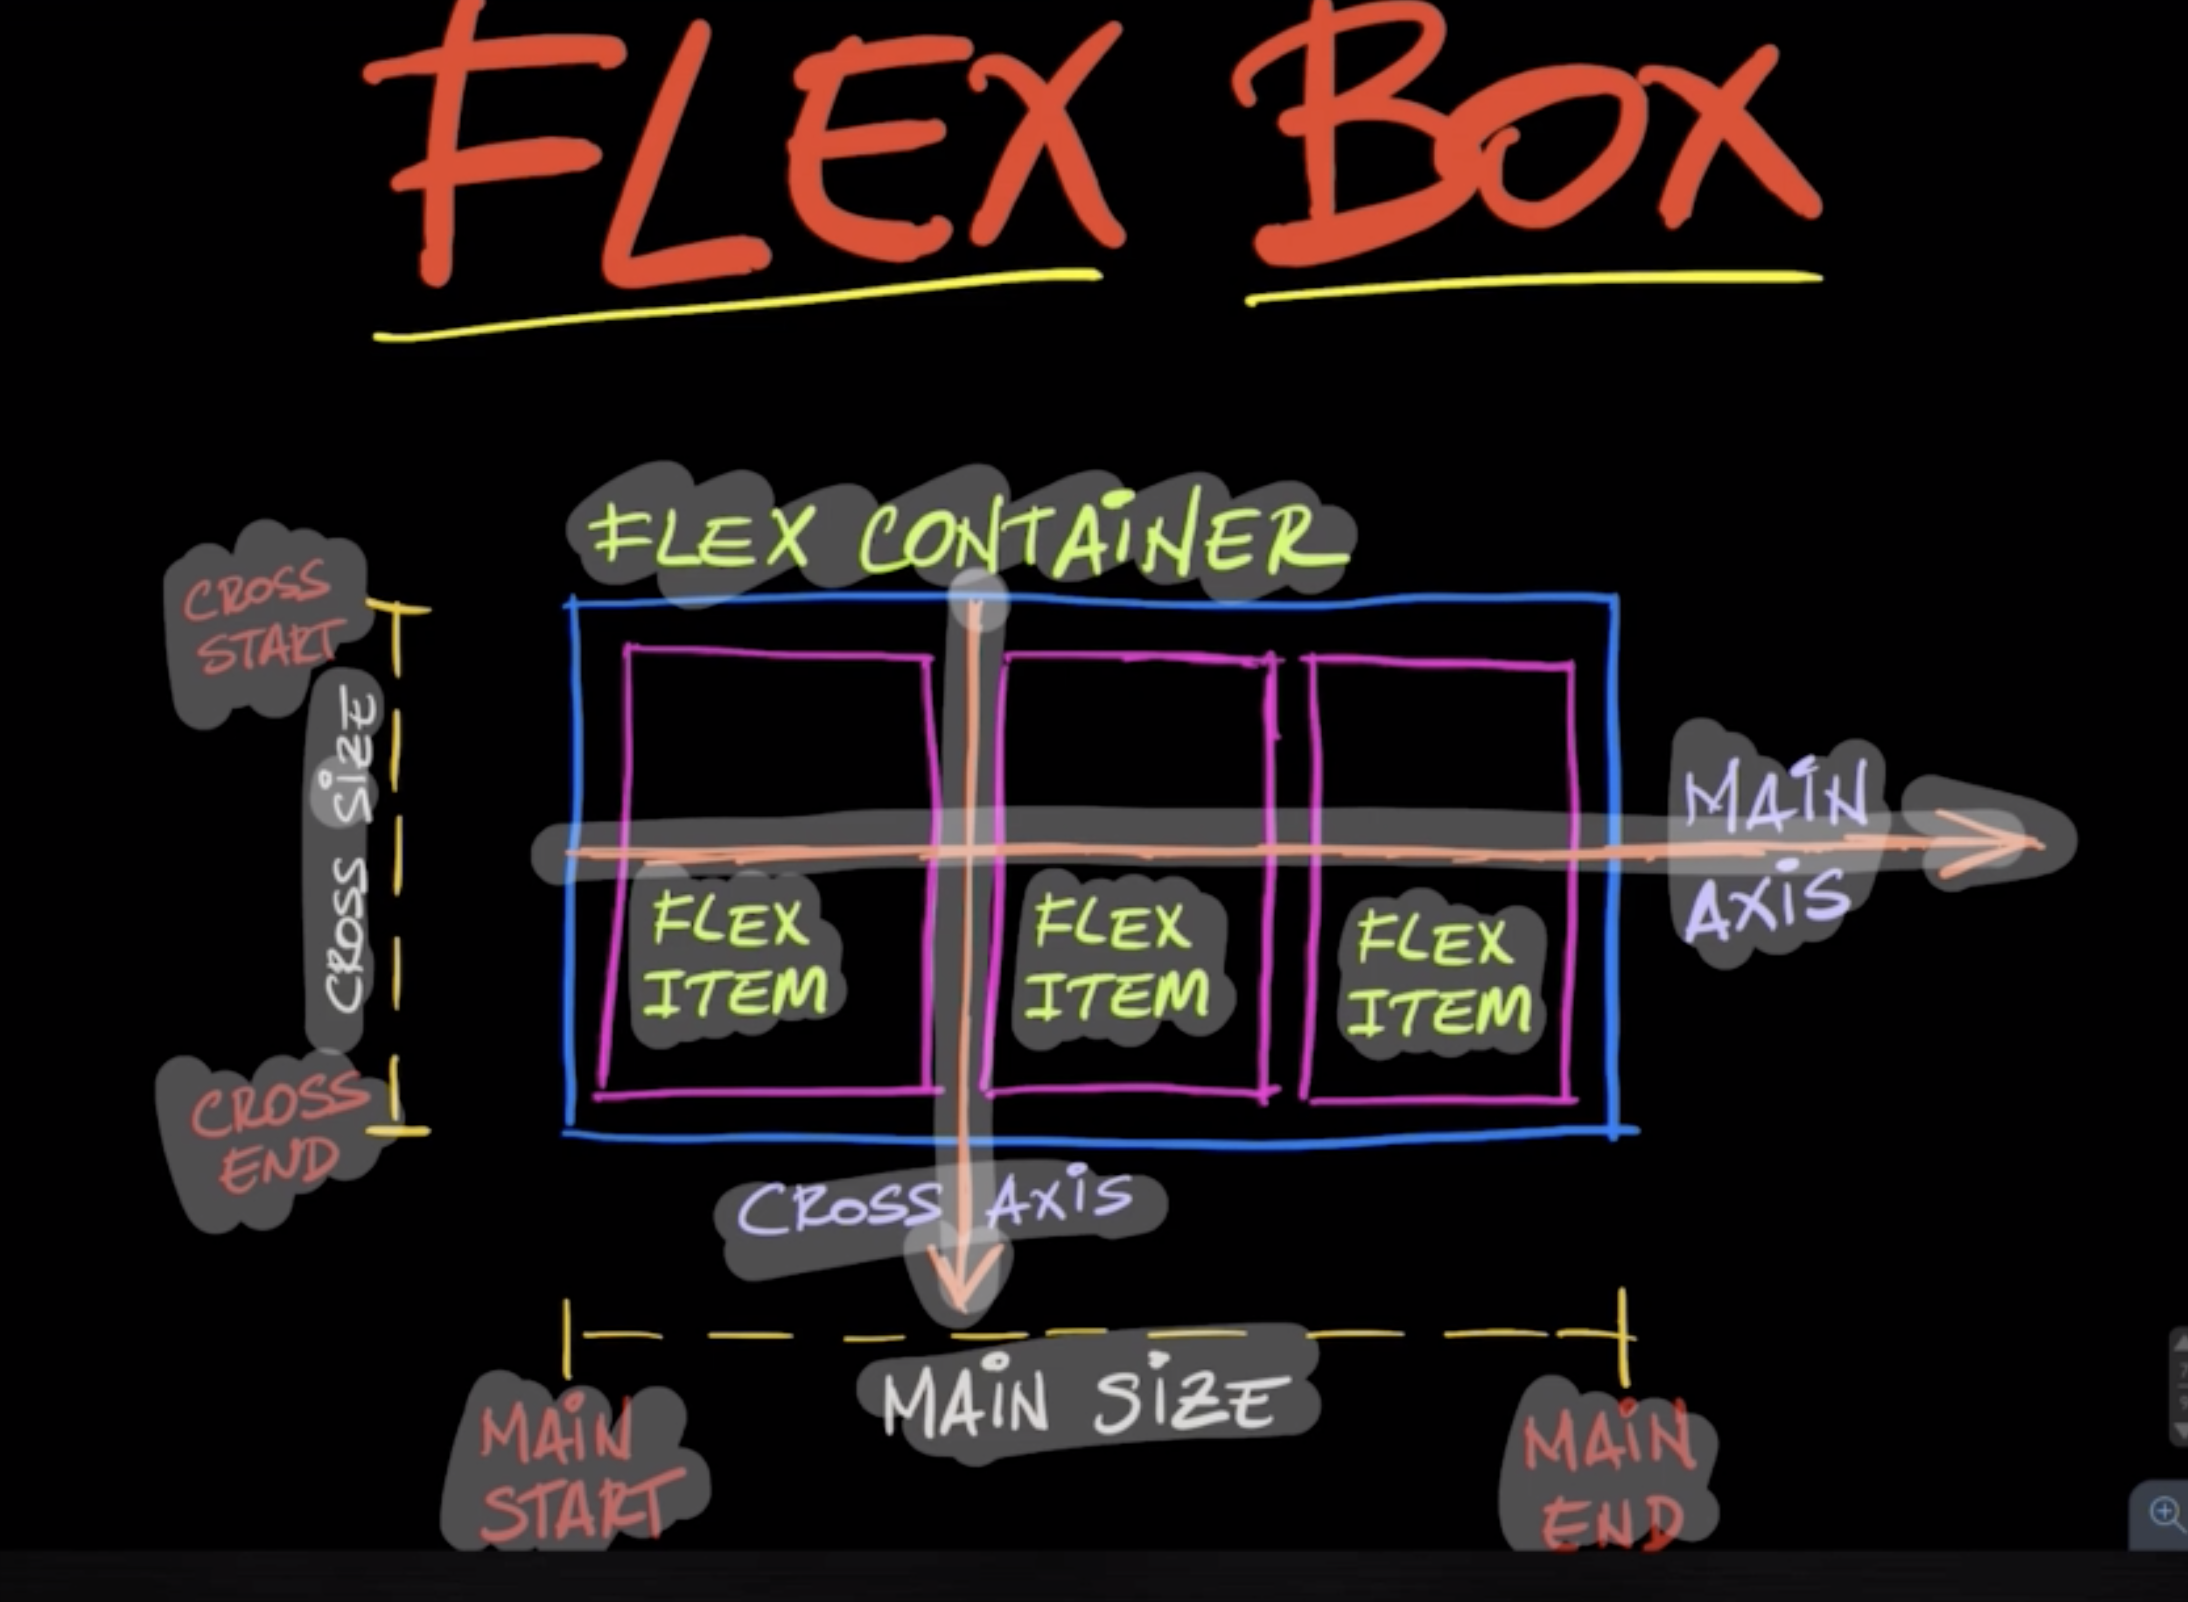 FLEX BOX